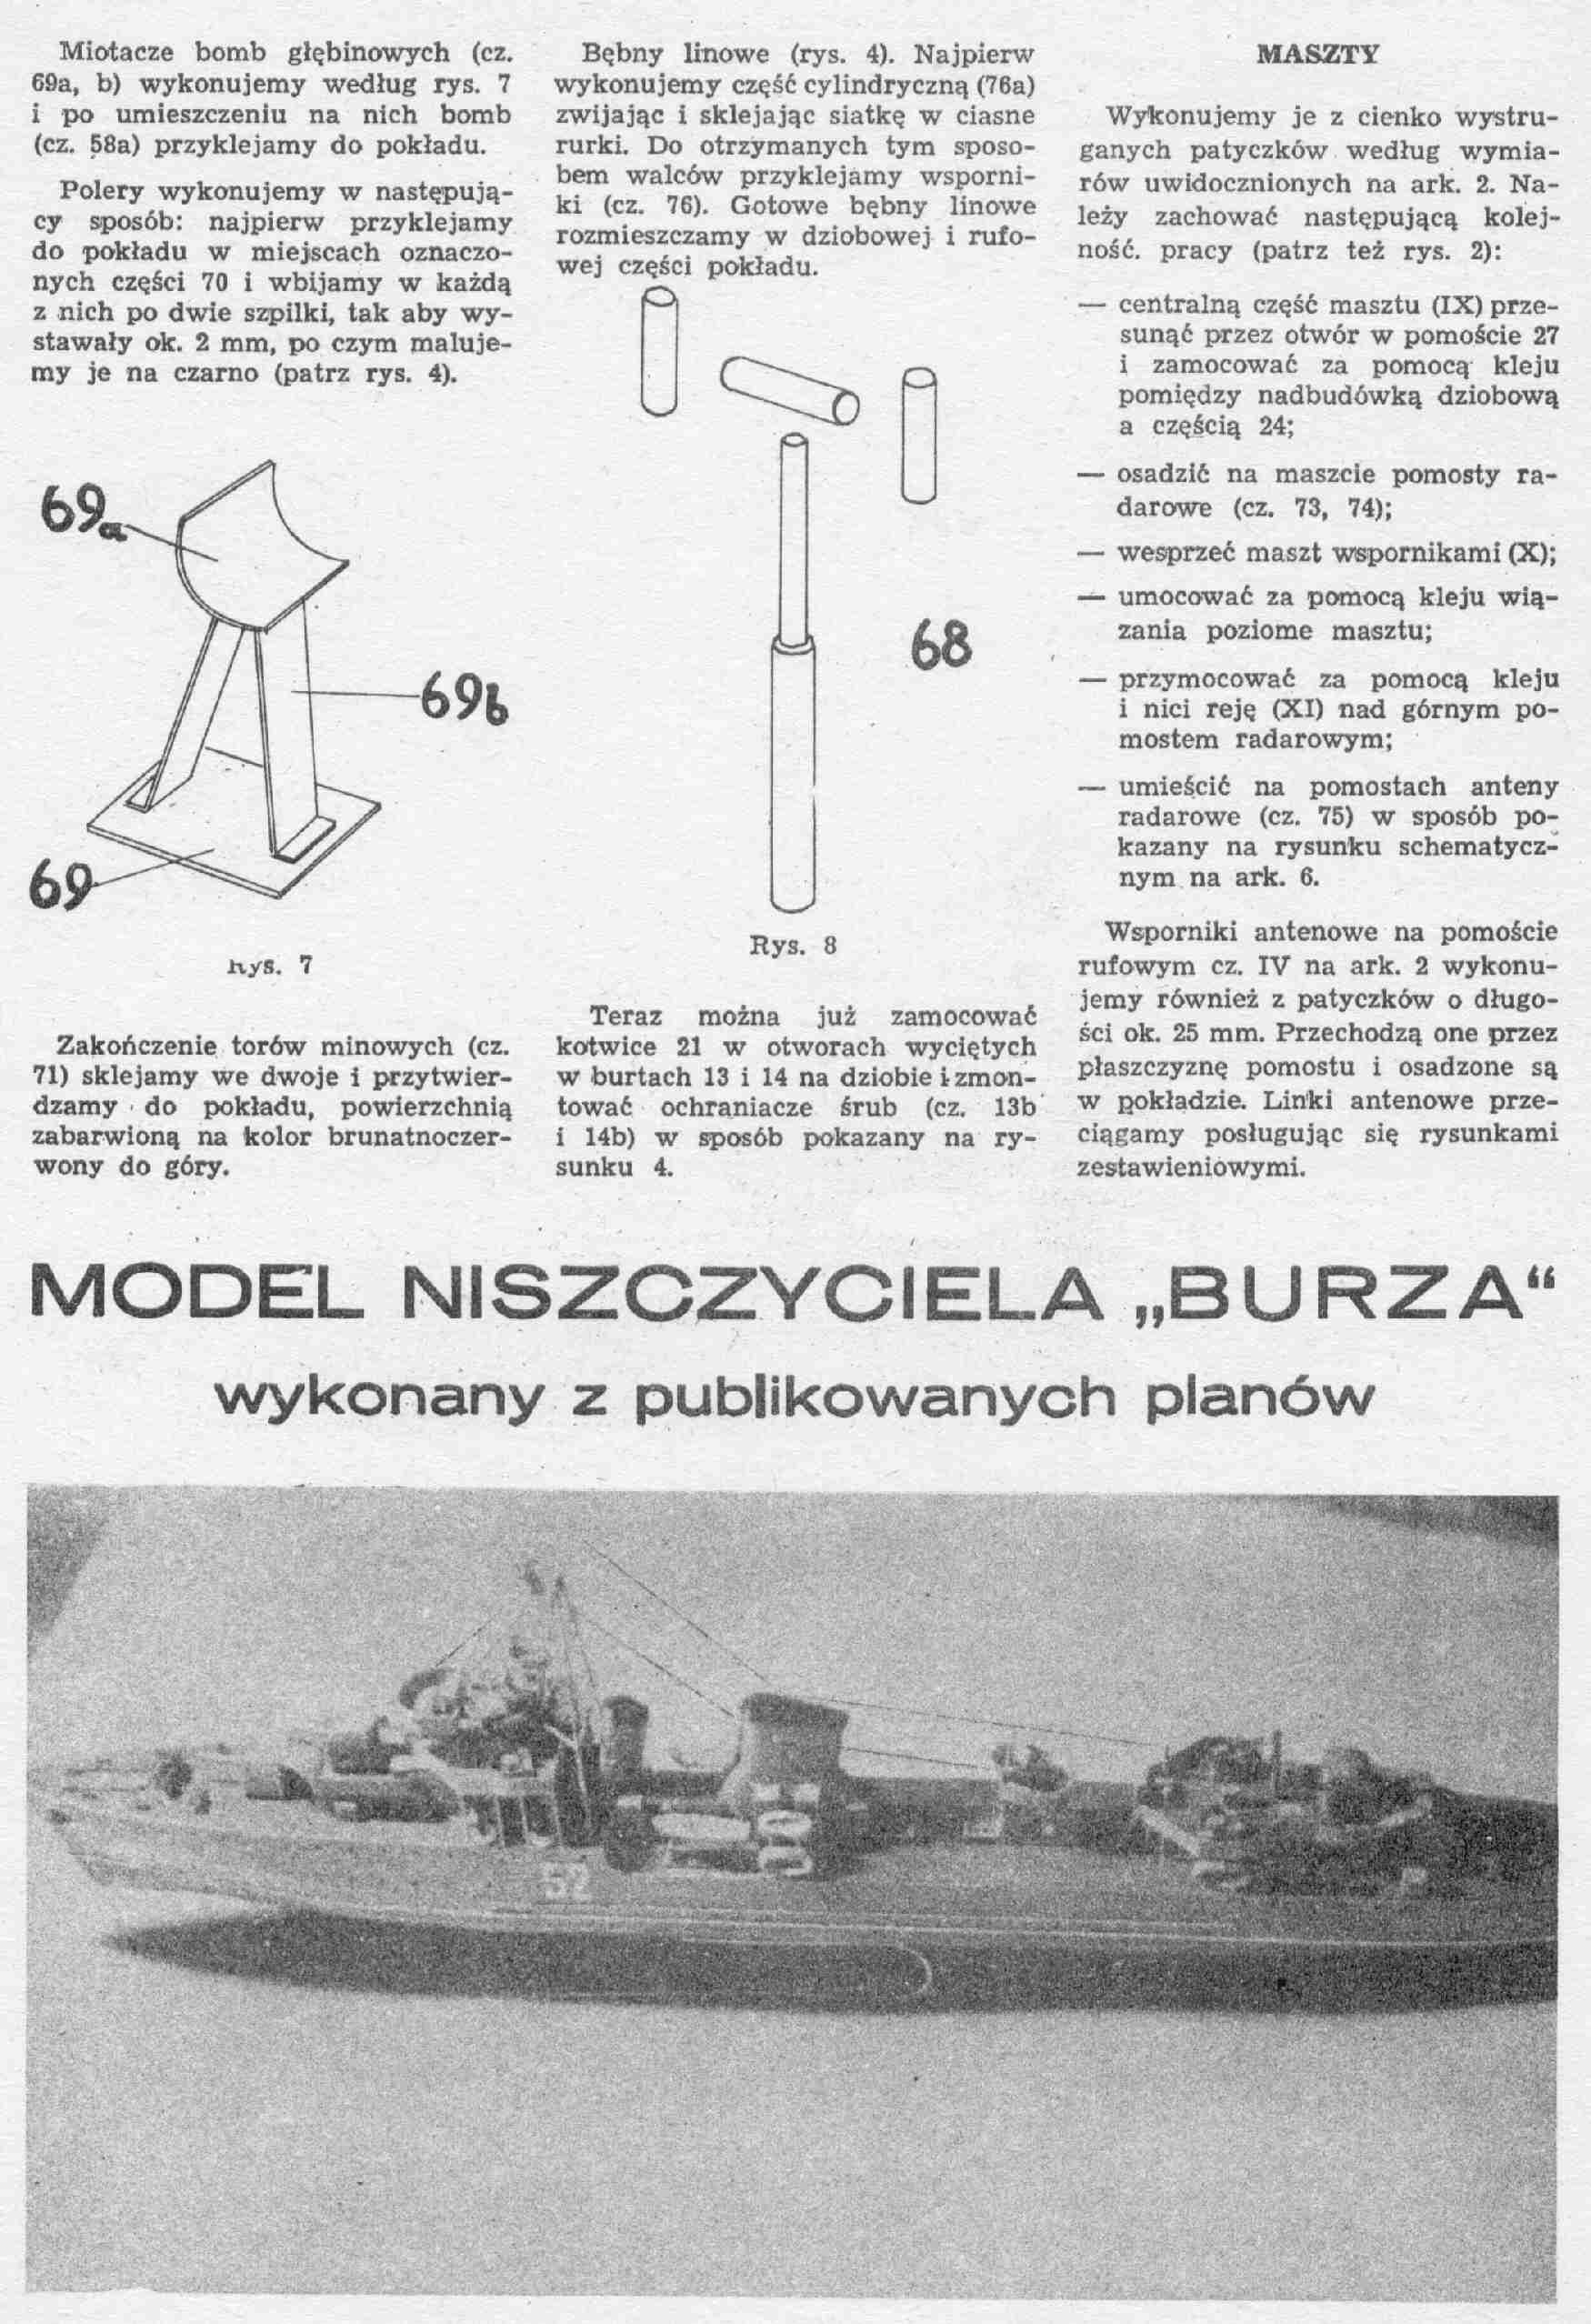 "Maly Modelarz" 2, 1967, 6 c.